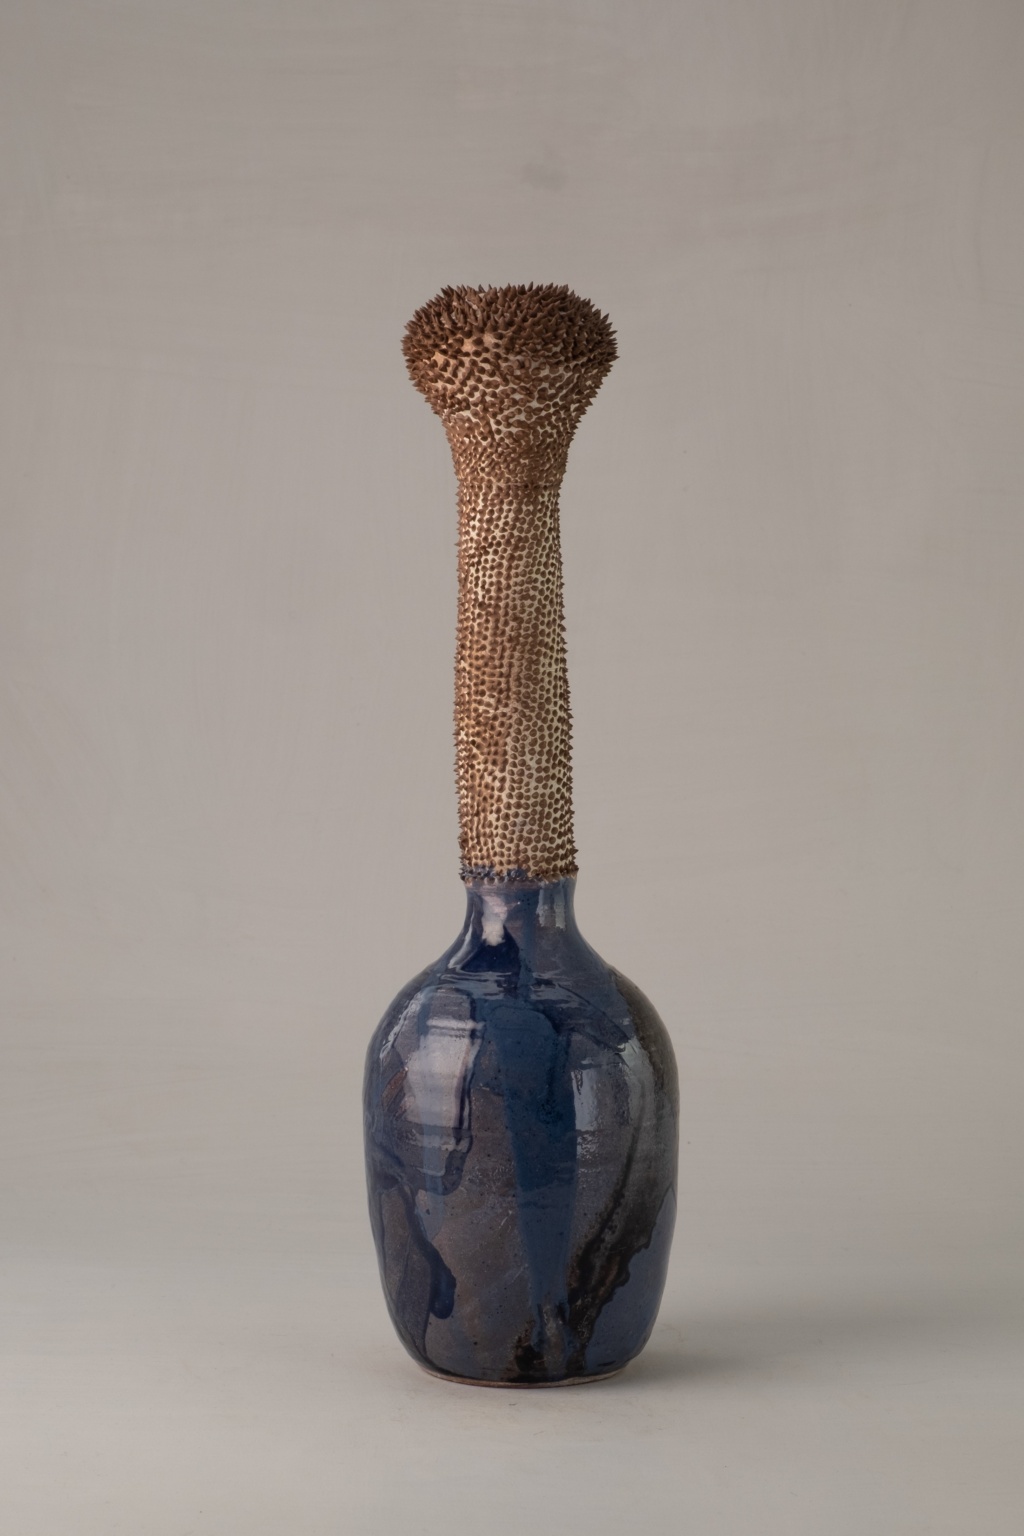 Gabi Hamm, Untitled, 2020
Clay, glaze
43 cm (height)